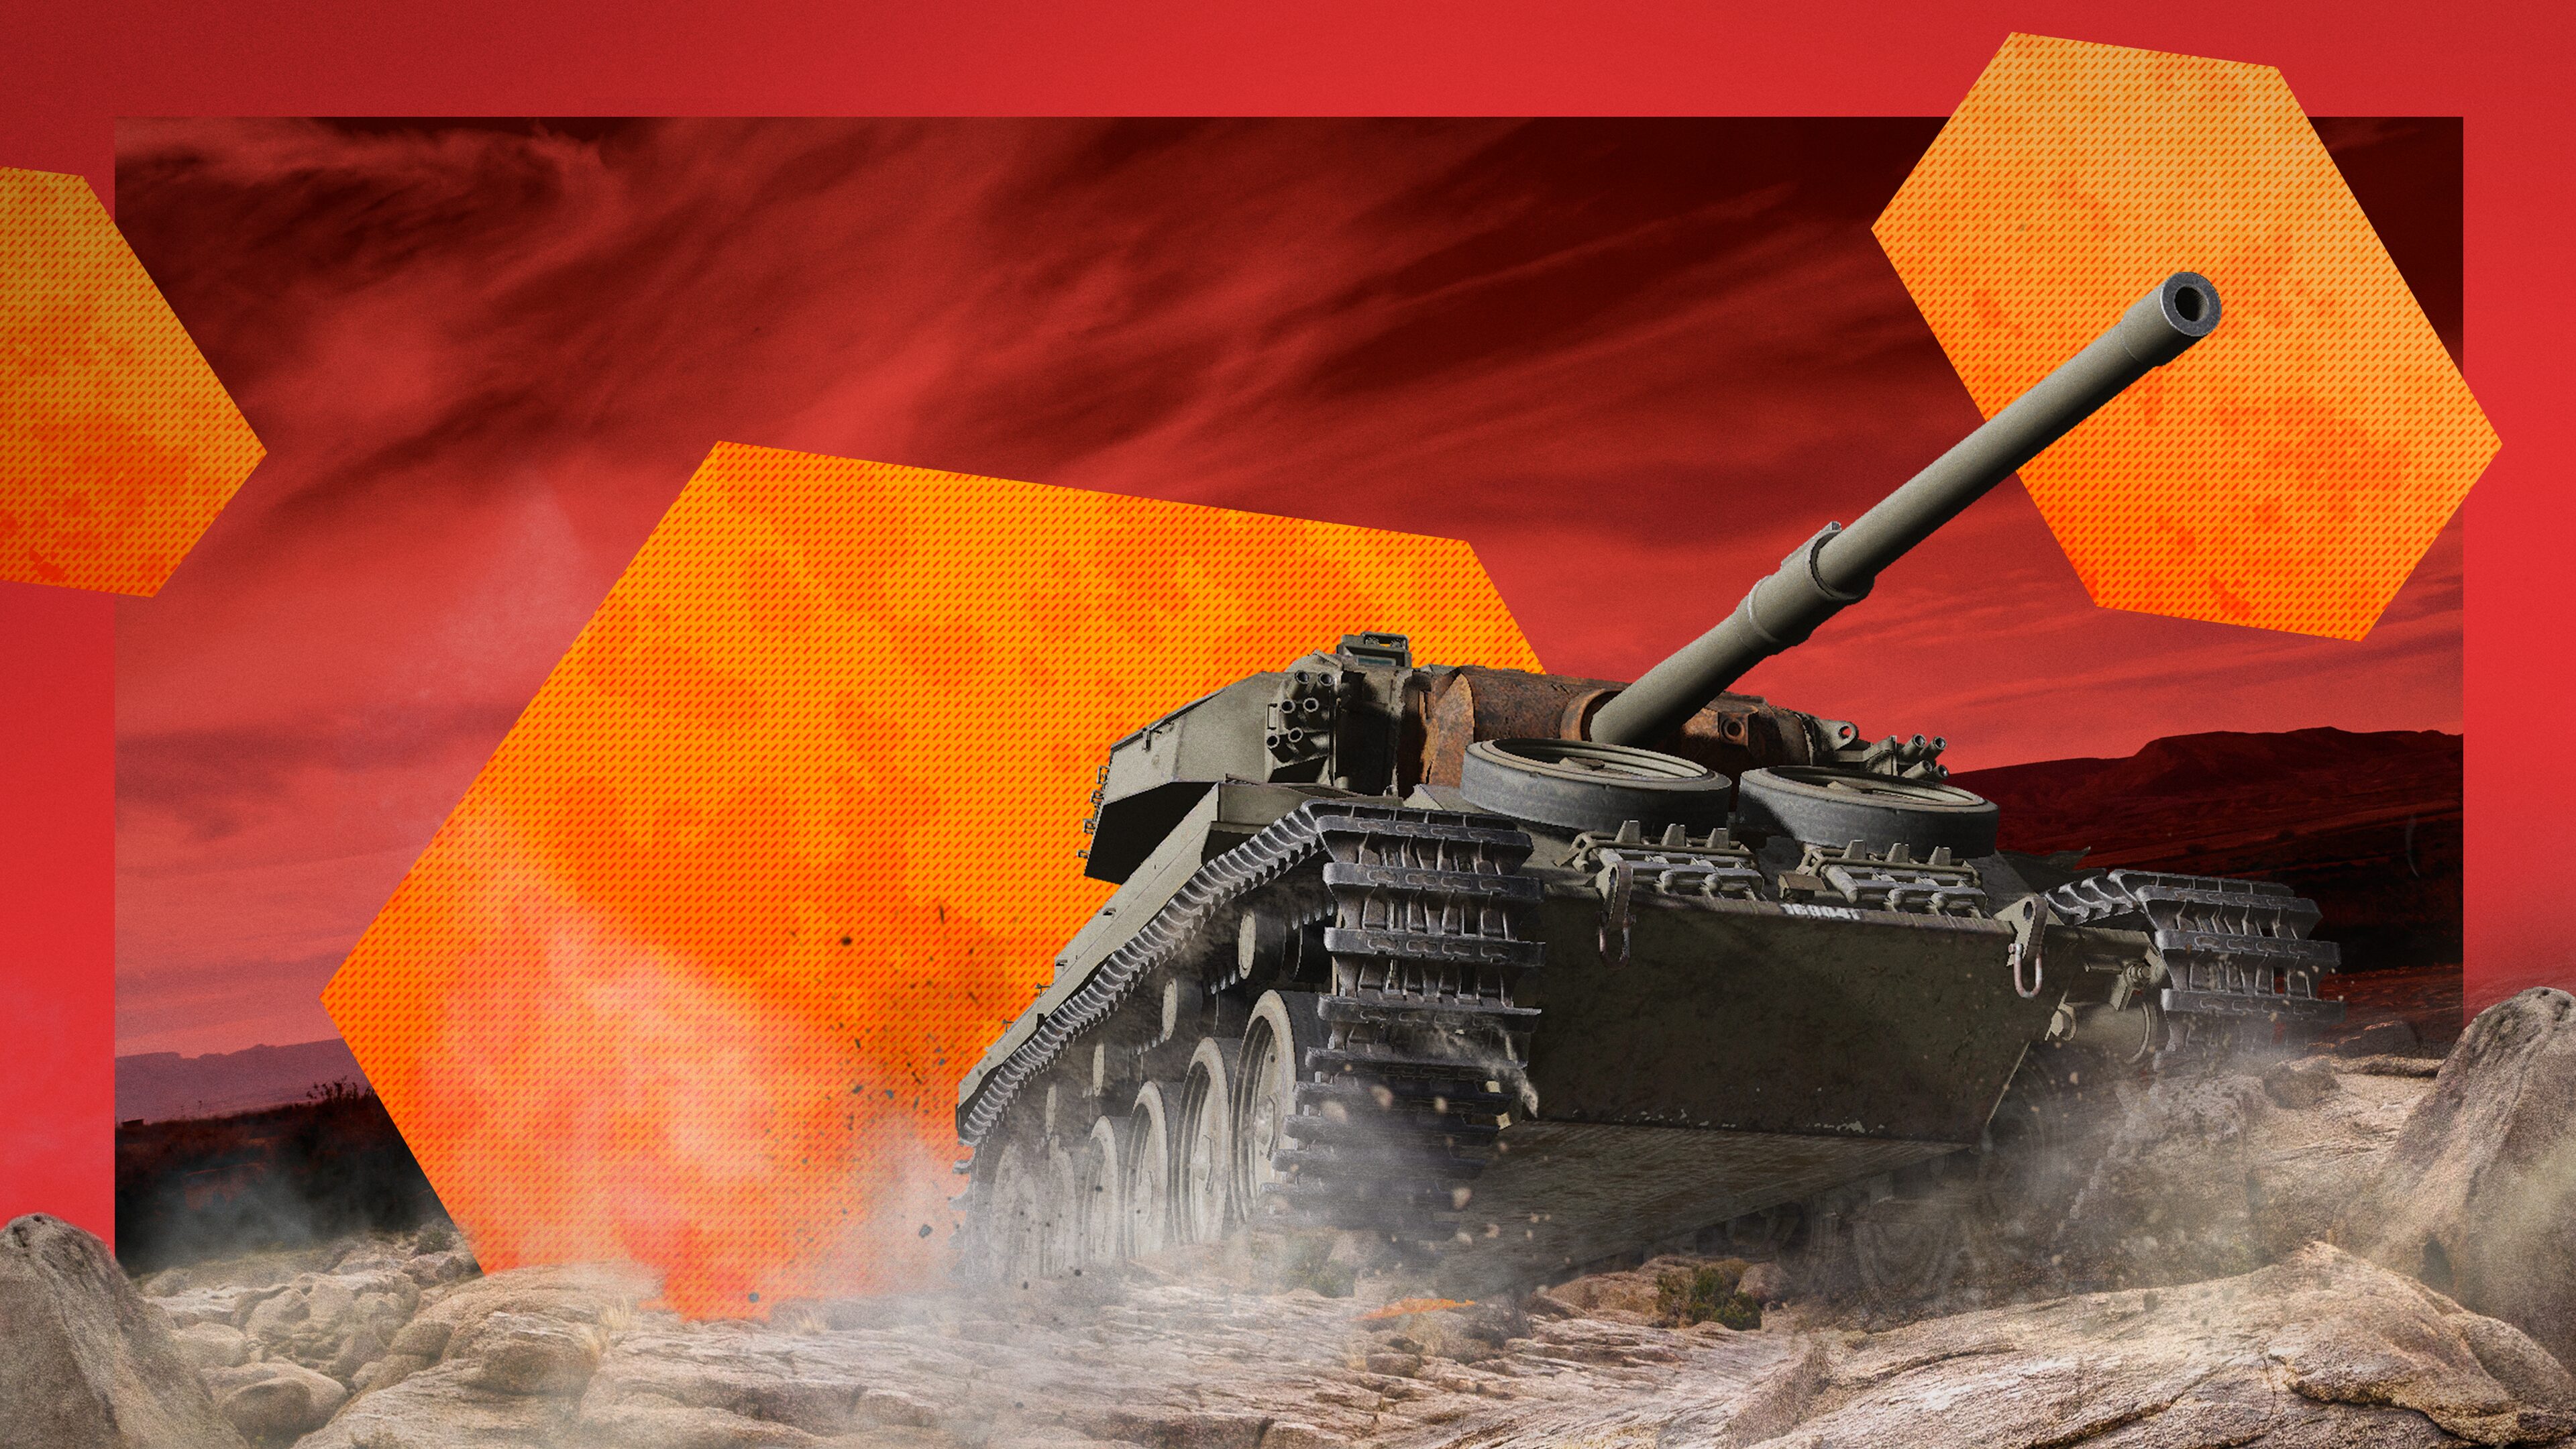 World of Tanks – Tank of the Month: Atomic Centurion